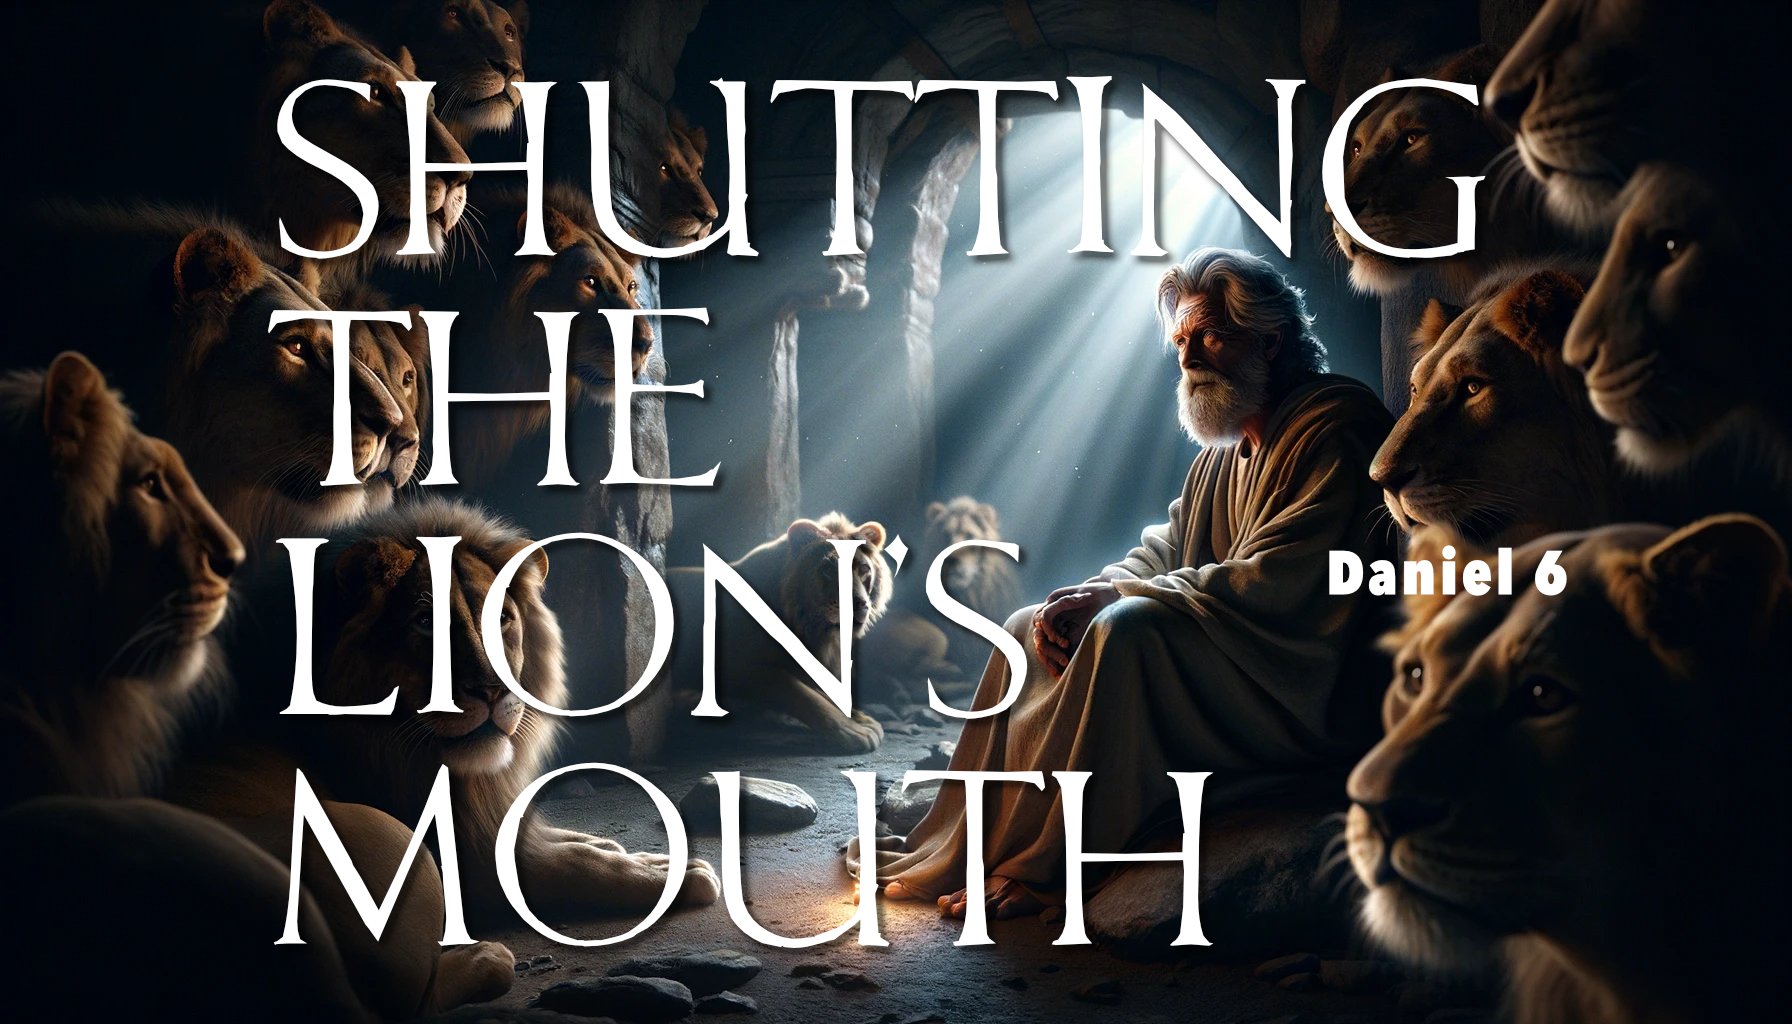 24.01.14p - Daniel 6 - Shutting The Lions Mouth - Title.jpg